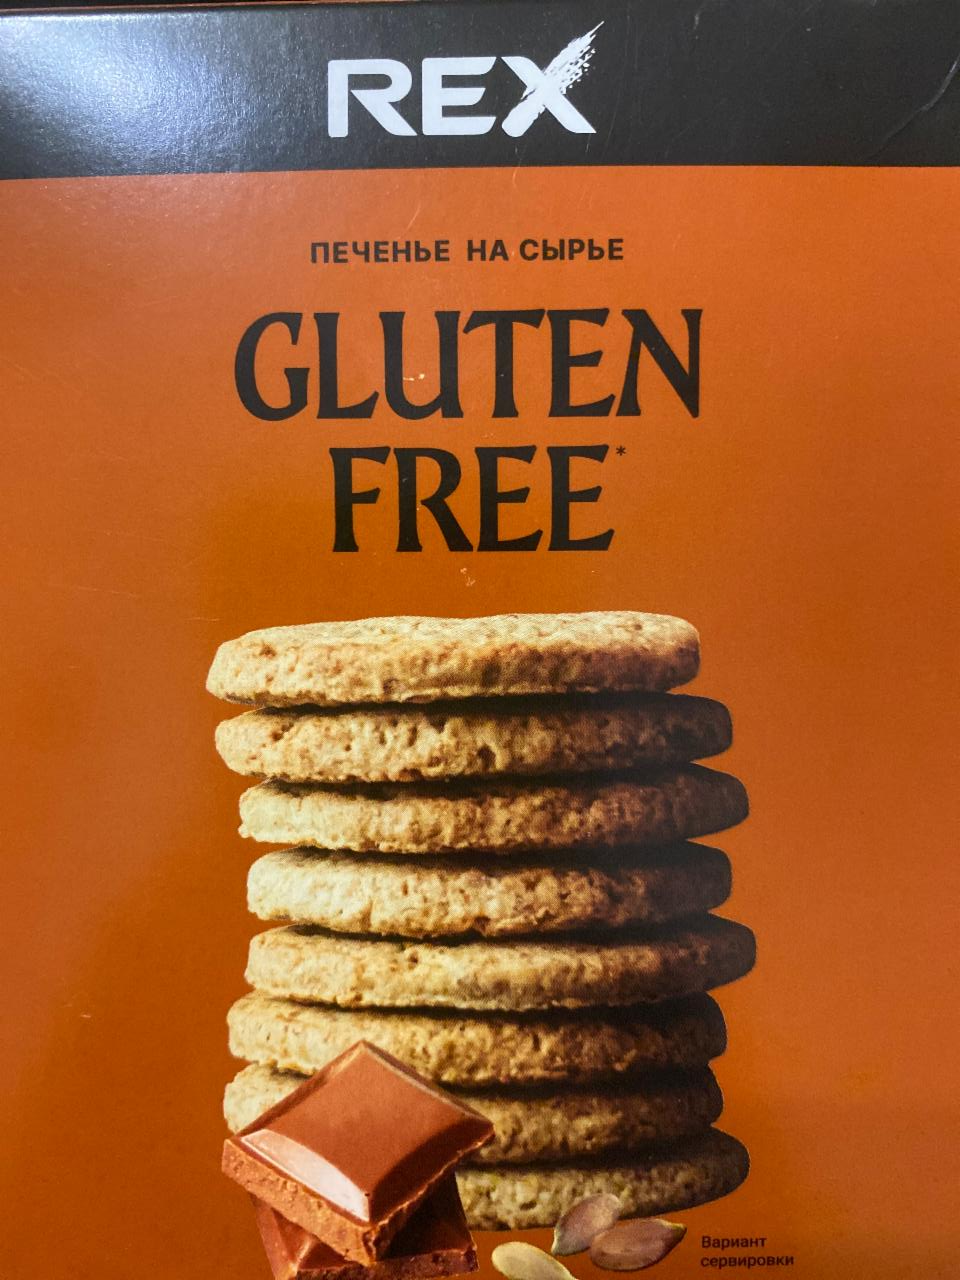 Фото - Печенье Gluten Free Rex